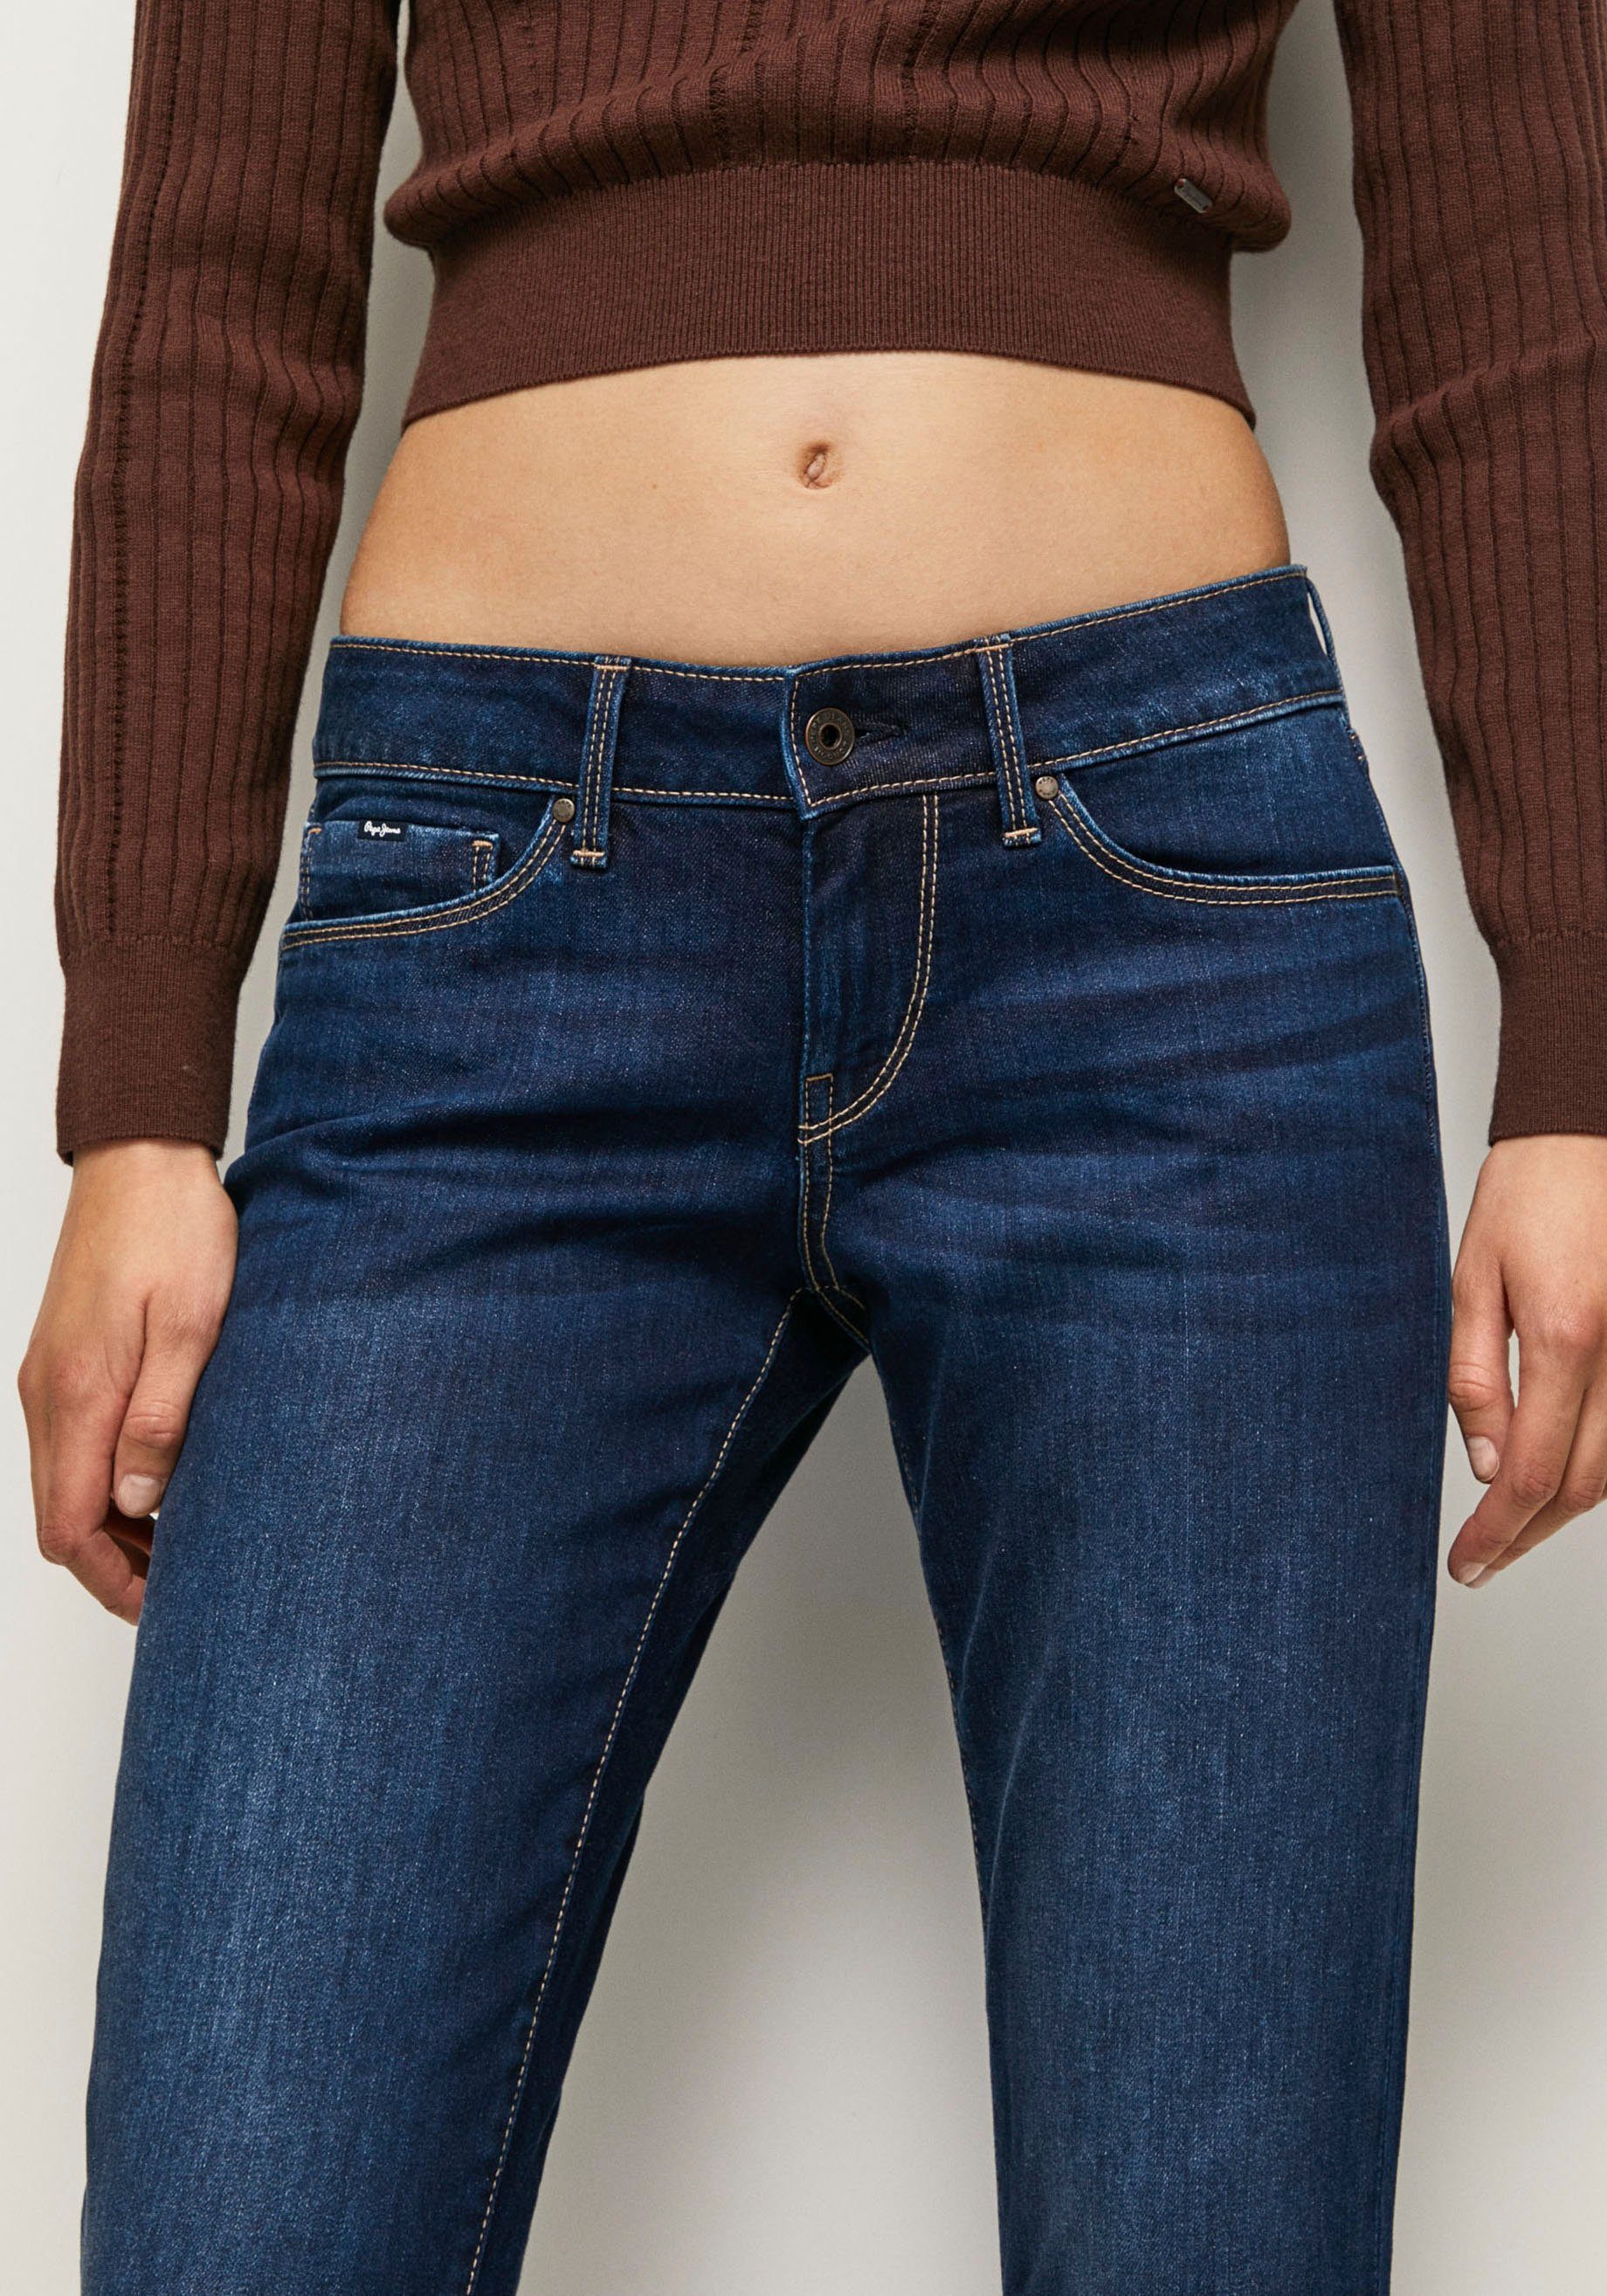 USED Stretch-Anteil Jeans Pepe DARK Bund im und Skinny-fit-Jeans 5-Pocket-Stil SOHO 1-Knopf mit